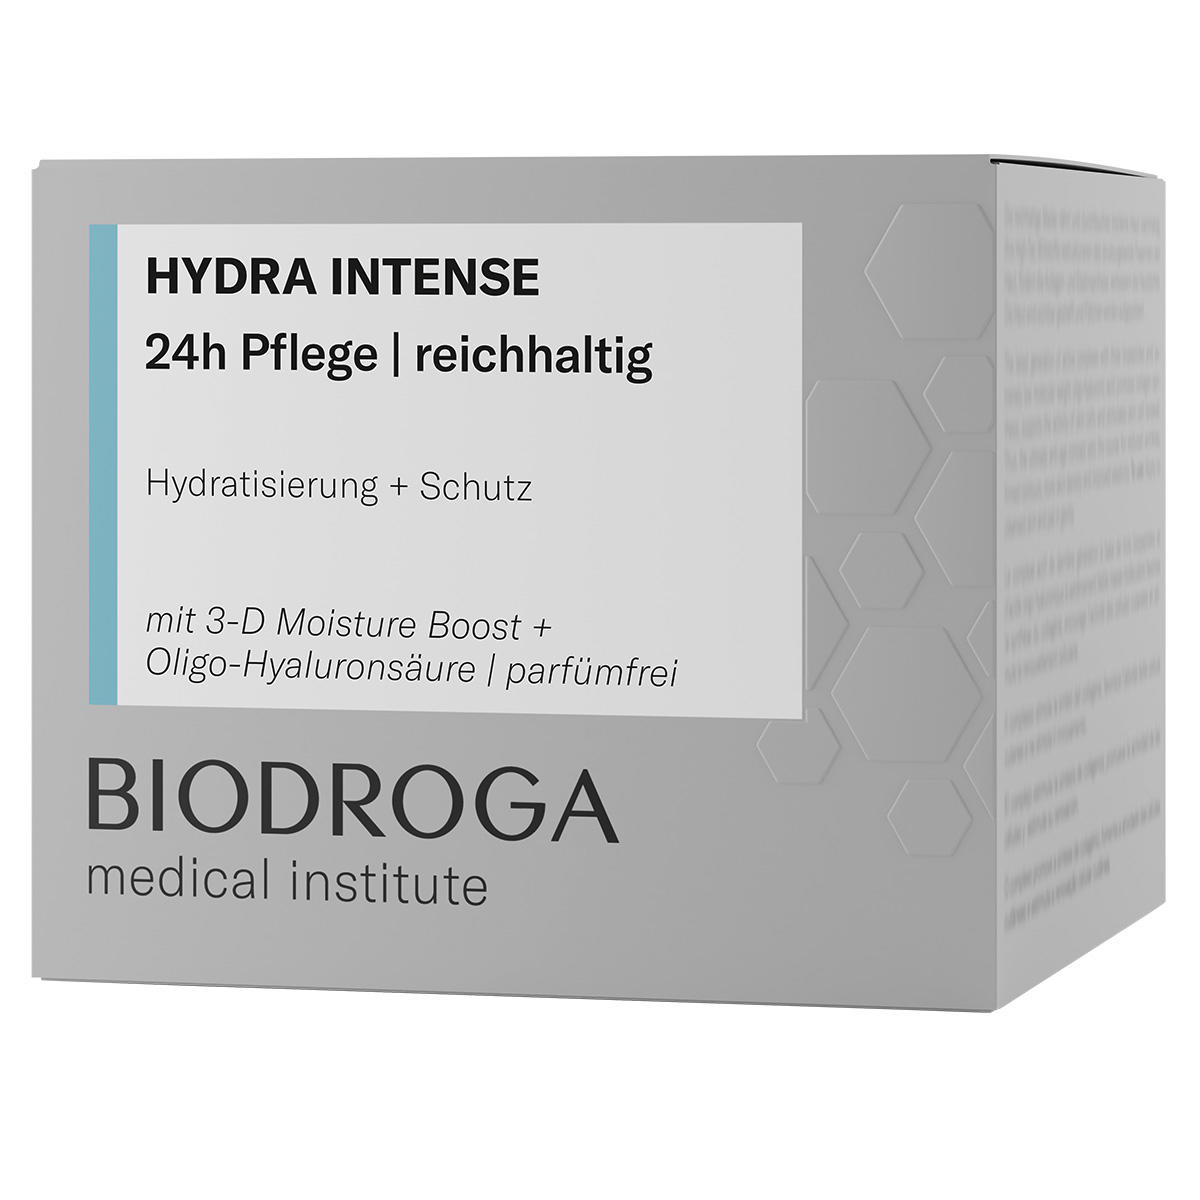 BIODROGA Medical Institute HYDRA INTENSE Atención 24 horas rica 50 ml - 2